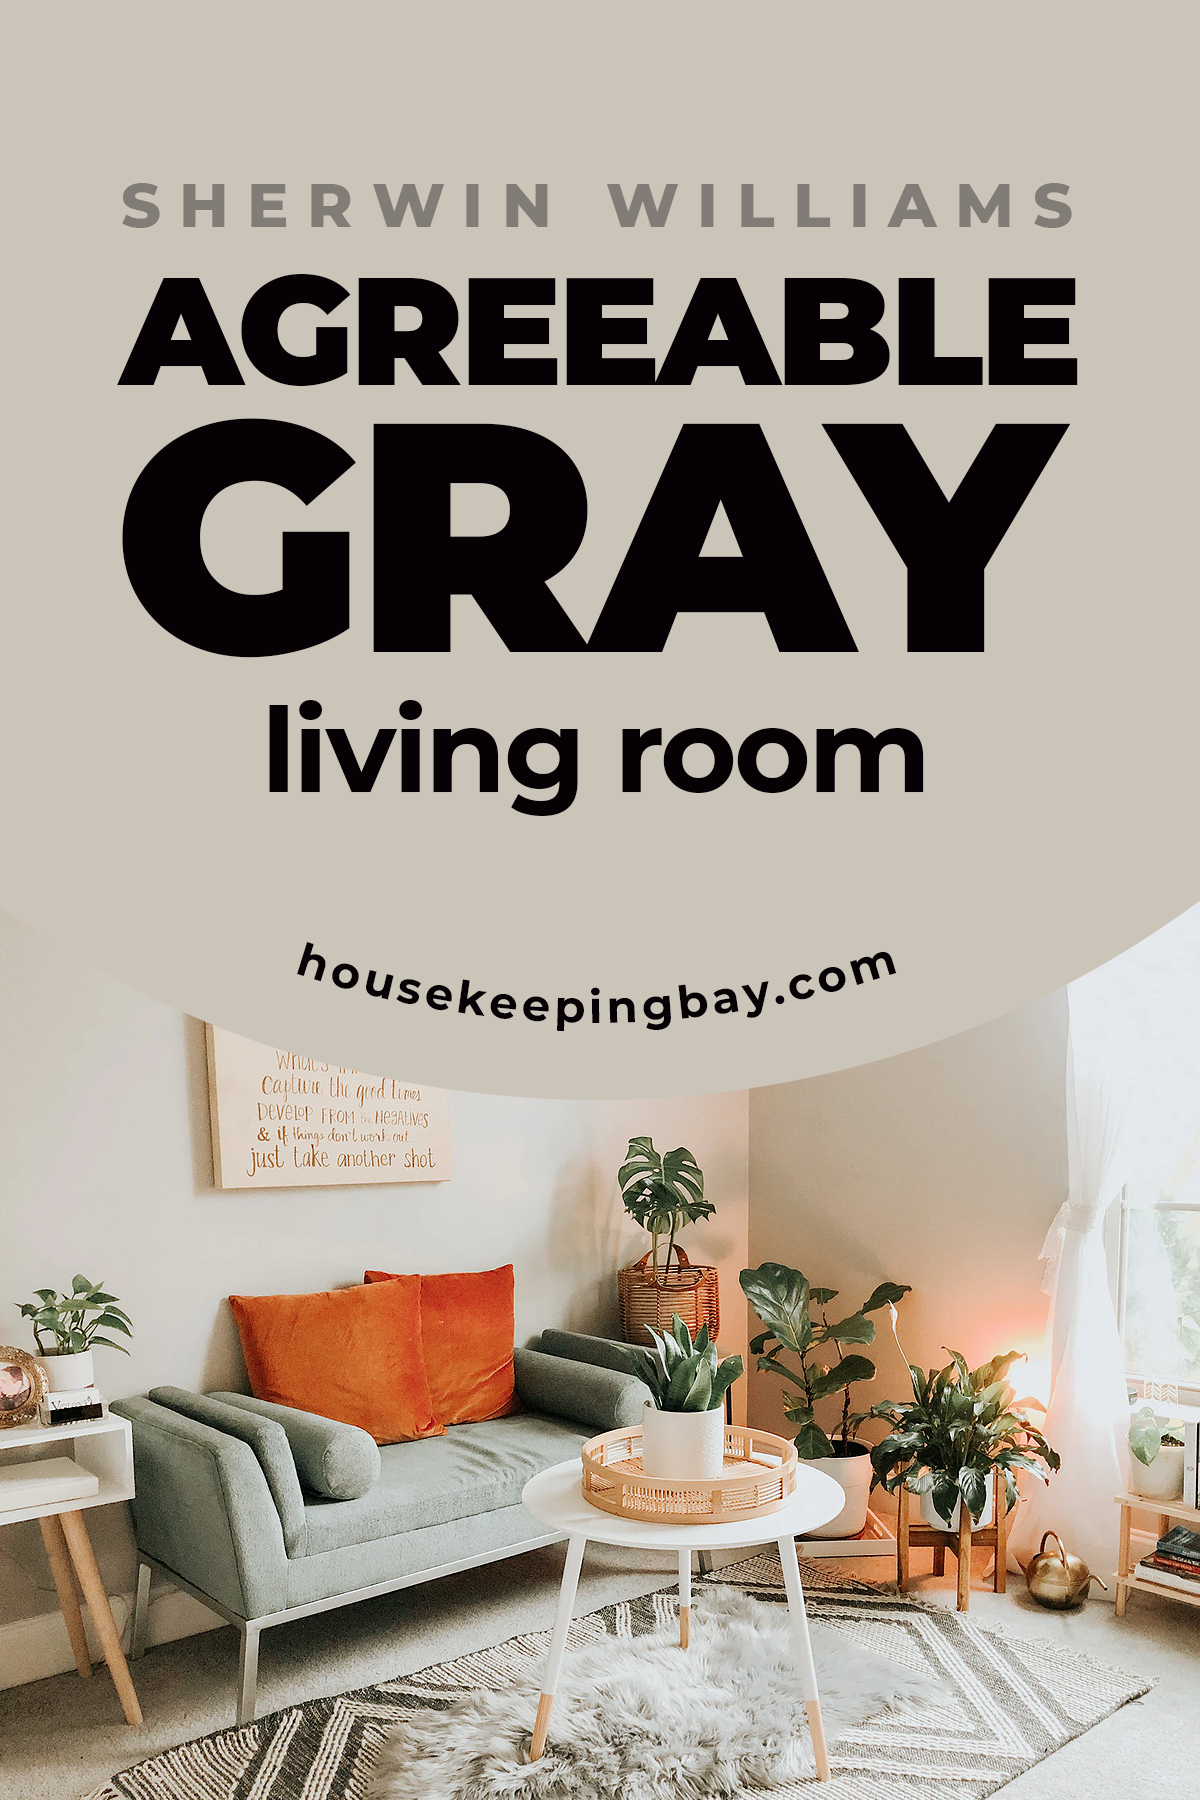 Agreeable Gray living room